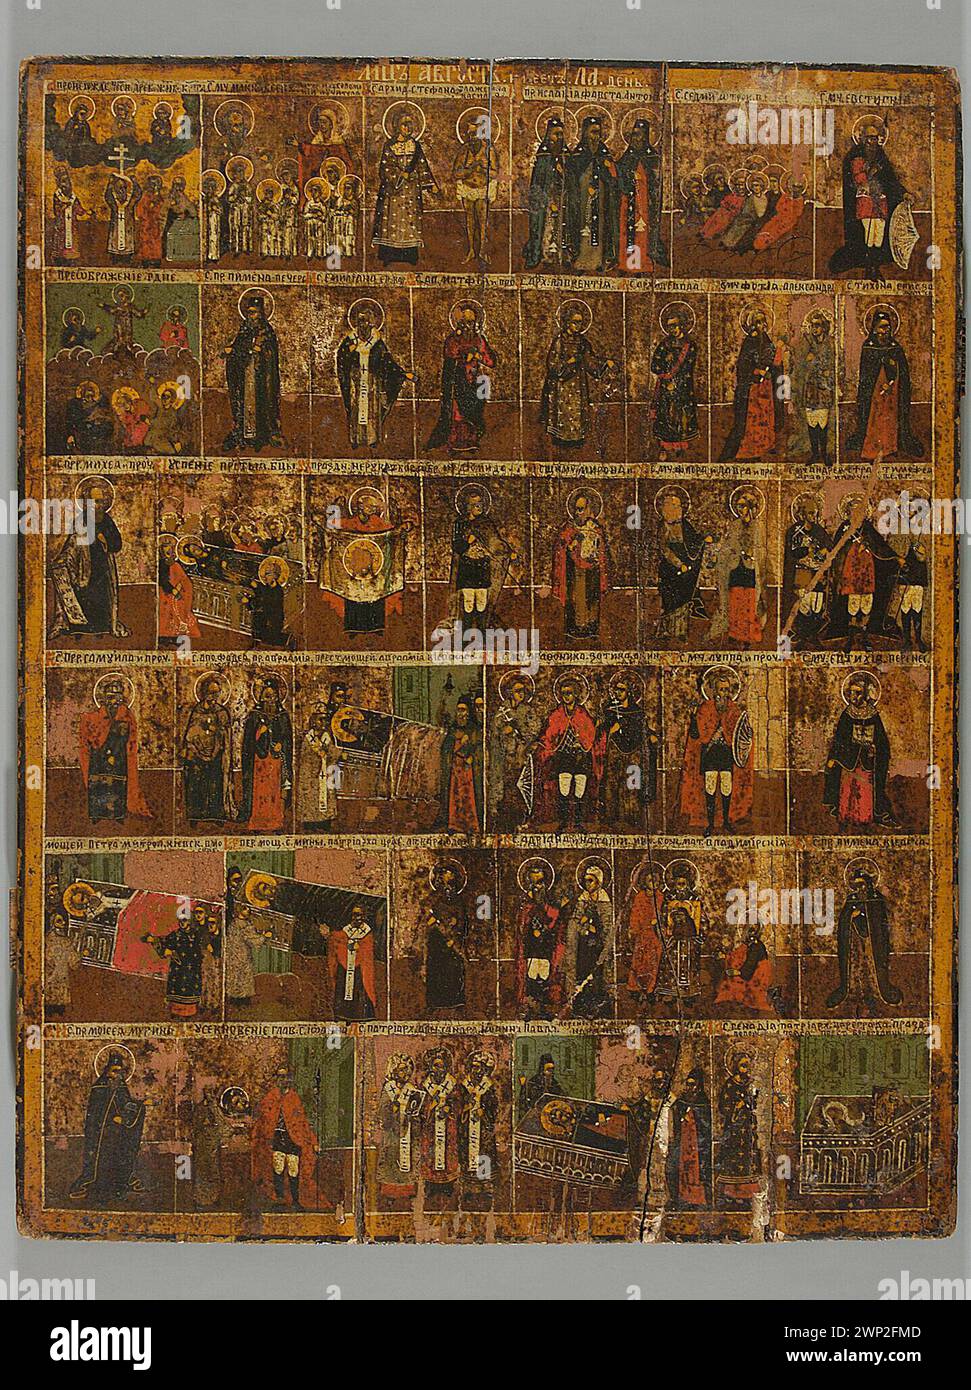 Calendar icon: monthly; Unknown Russian workshop (1700-1970); 19th/20th century (1800-00-00-1810-00-00);Abraham Pieczerski (Saint - Fl. Ca 1150 -Ca 1250), Abraham Smoleński (Saint -? -1221), Adrian Nichemian (Saint -? -304), Agapiusz Roman (Saint -? -118), Agatonik (Agatonik ( St. (Saint -? -166), Andrzej Stratilates (Saint - Fl. Ca 850), Antonin, martyr (Saint -? -166), Awim (Saint -? -166), Bartłomiej (Saint), Dalmatian (Saint - Fl. Ca 250), Diomid (Saint -? -298), Eleazar, (Saint -? -166), Emilian (Saint -? -363), Euplus (Saint -? -? -304) , Eutychiusz of Nicomedia (Saint -? -303), Eusebon Stock Photo